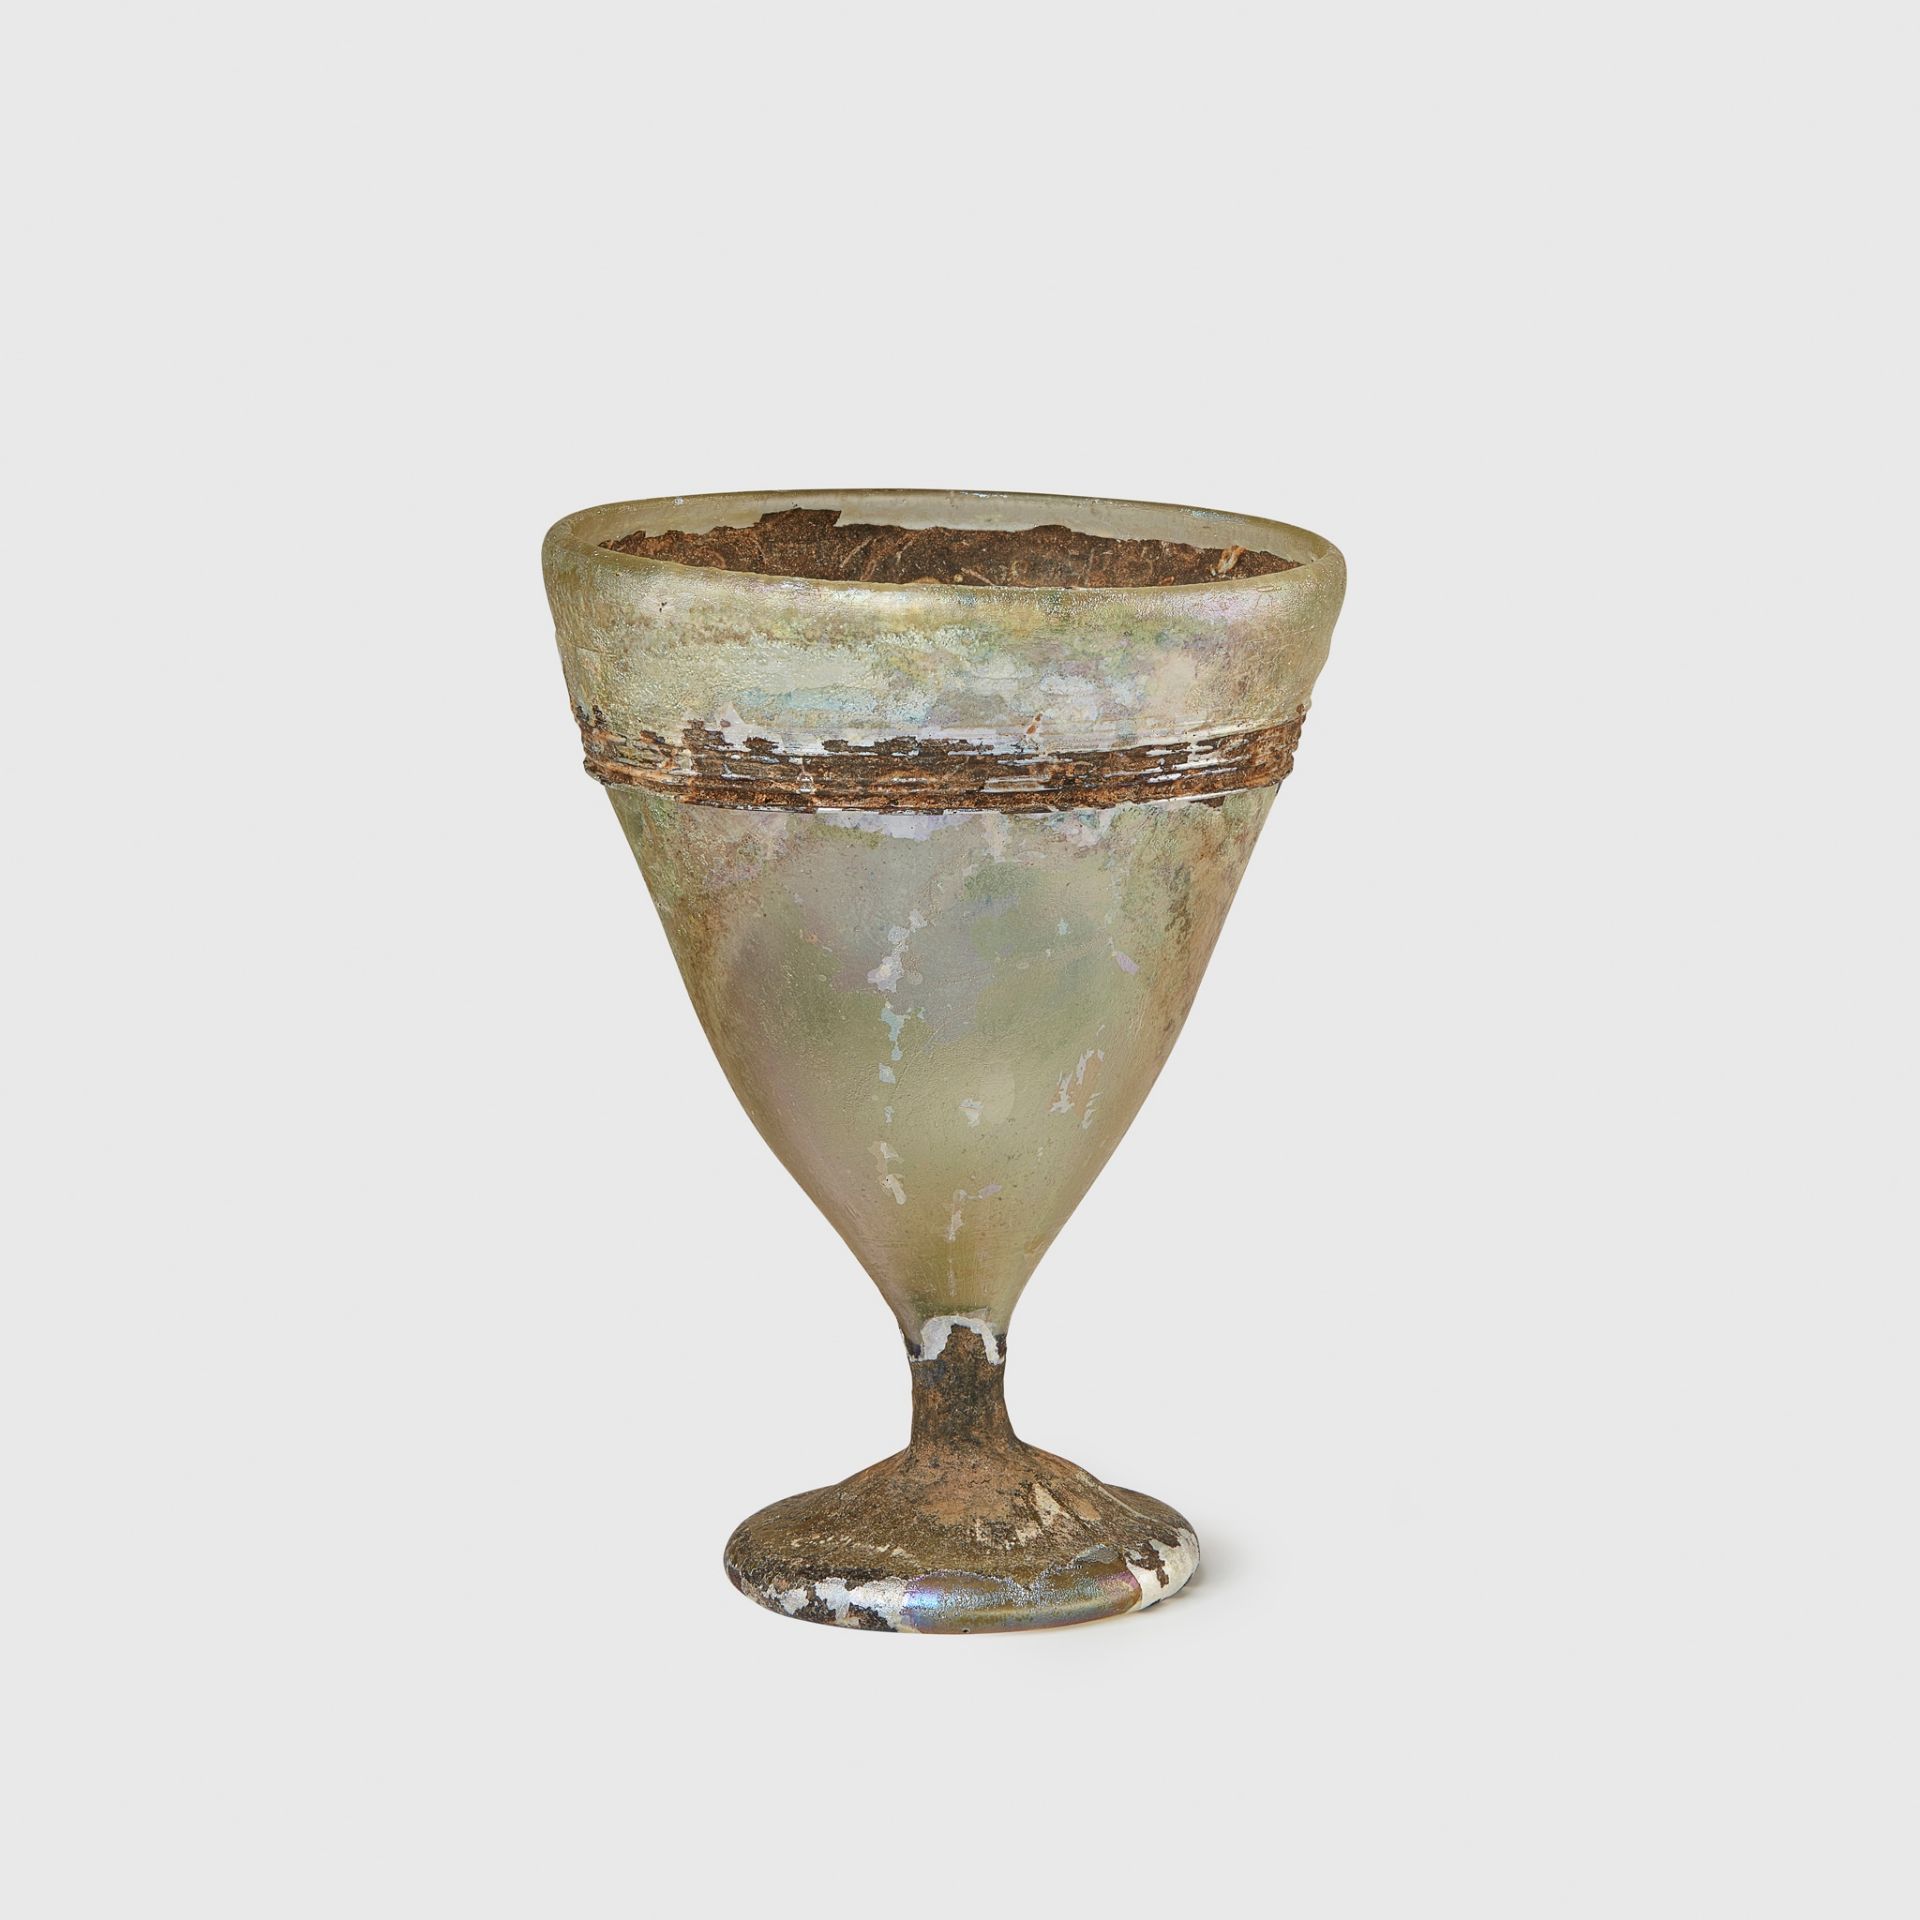 ROMAN GLASS STEM CUP EUROPE / NEAR EAST, 4TH - 5TH CENTURY A.D.